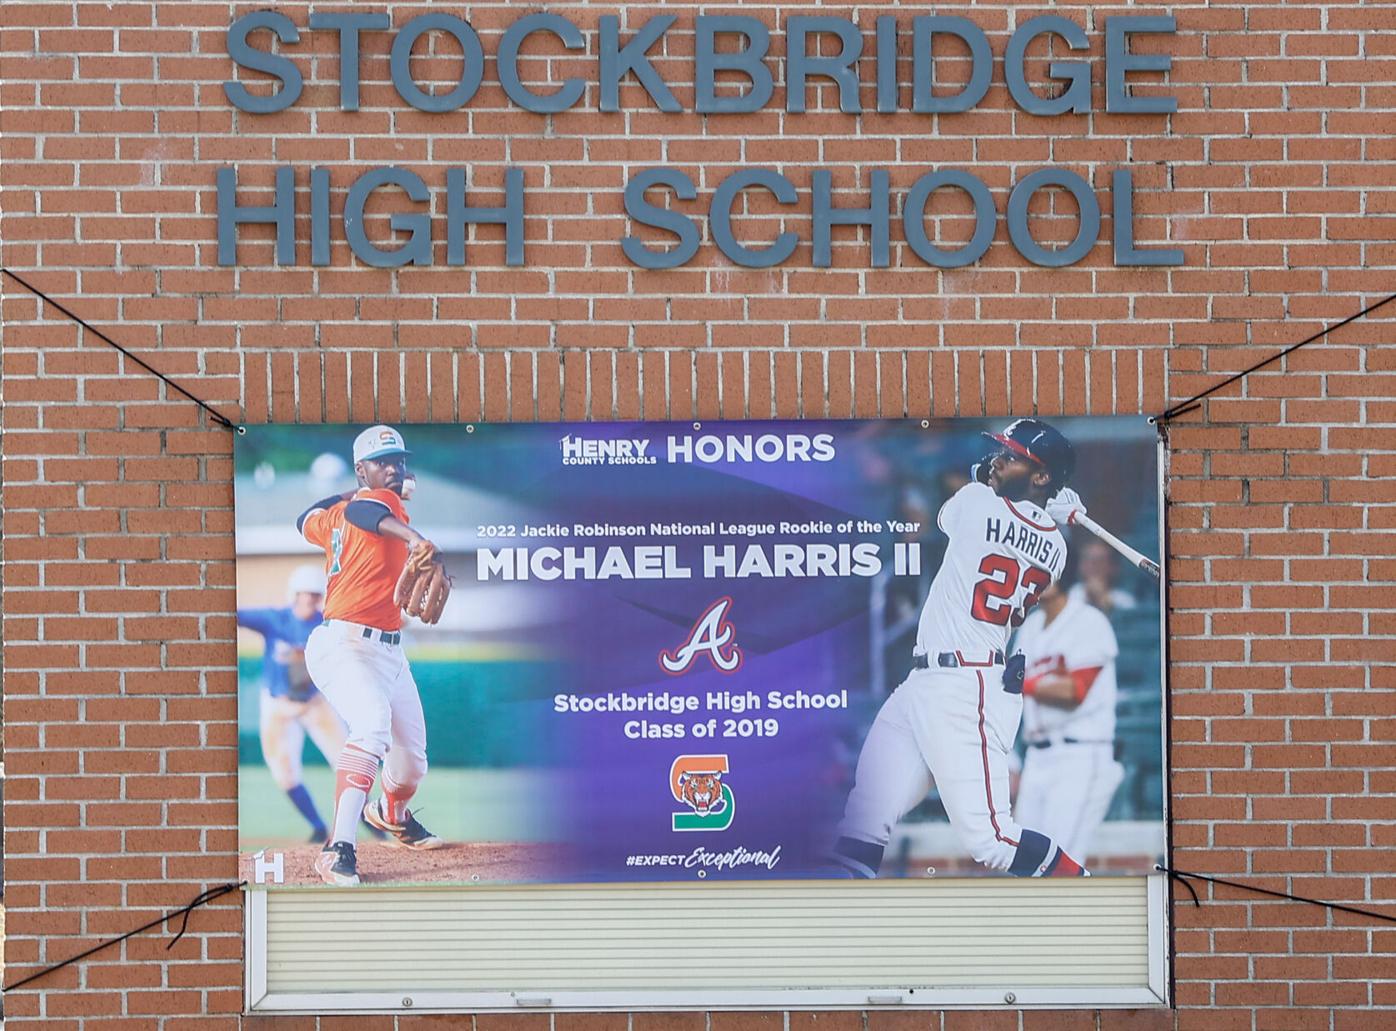 Stockbridge's Michael Harris II named National League Rookie of